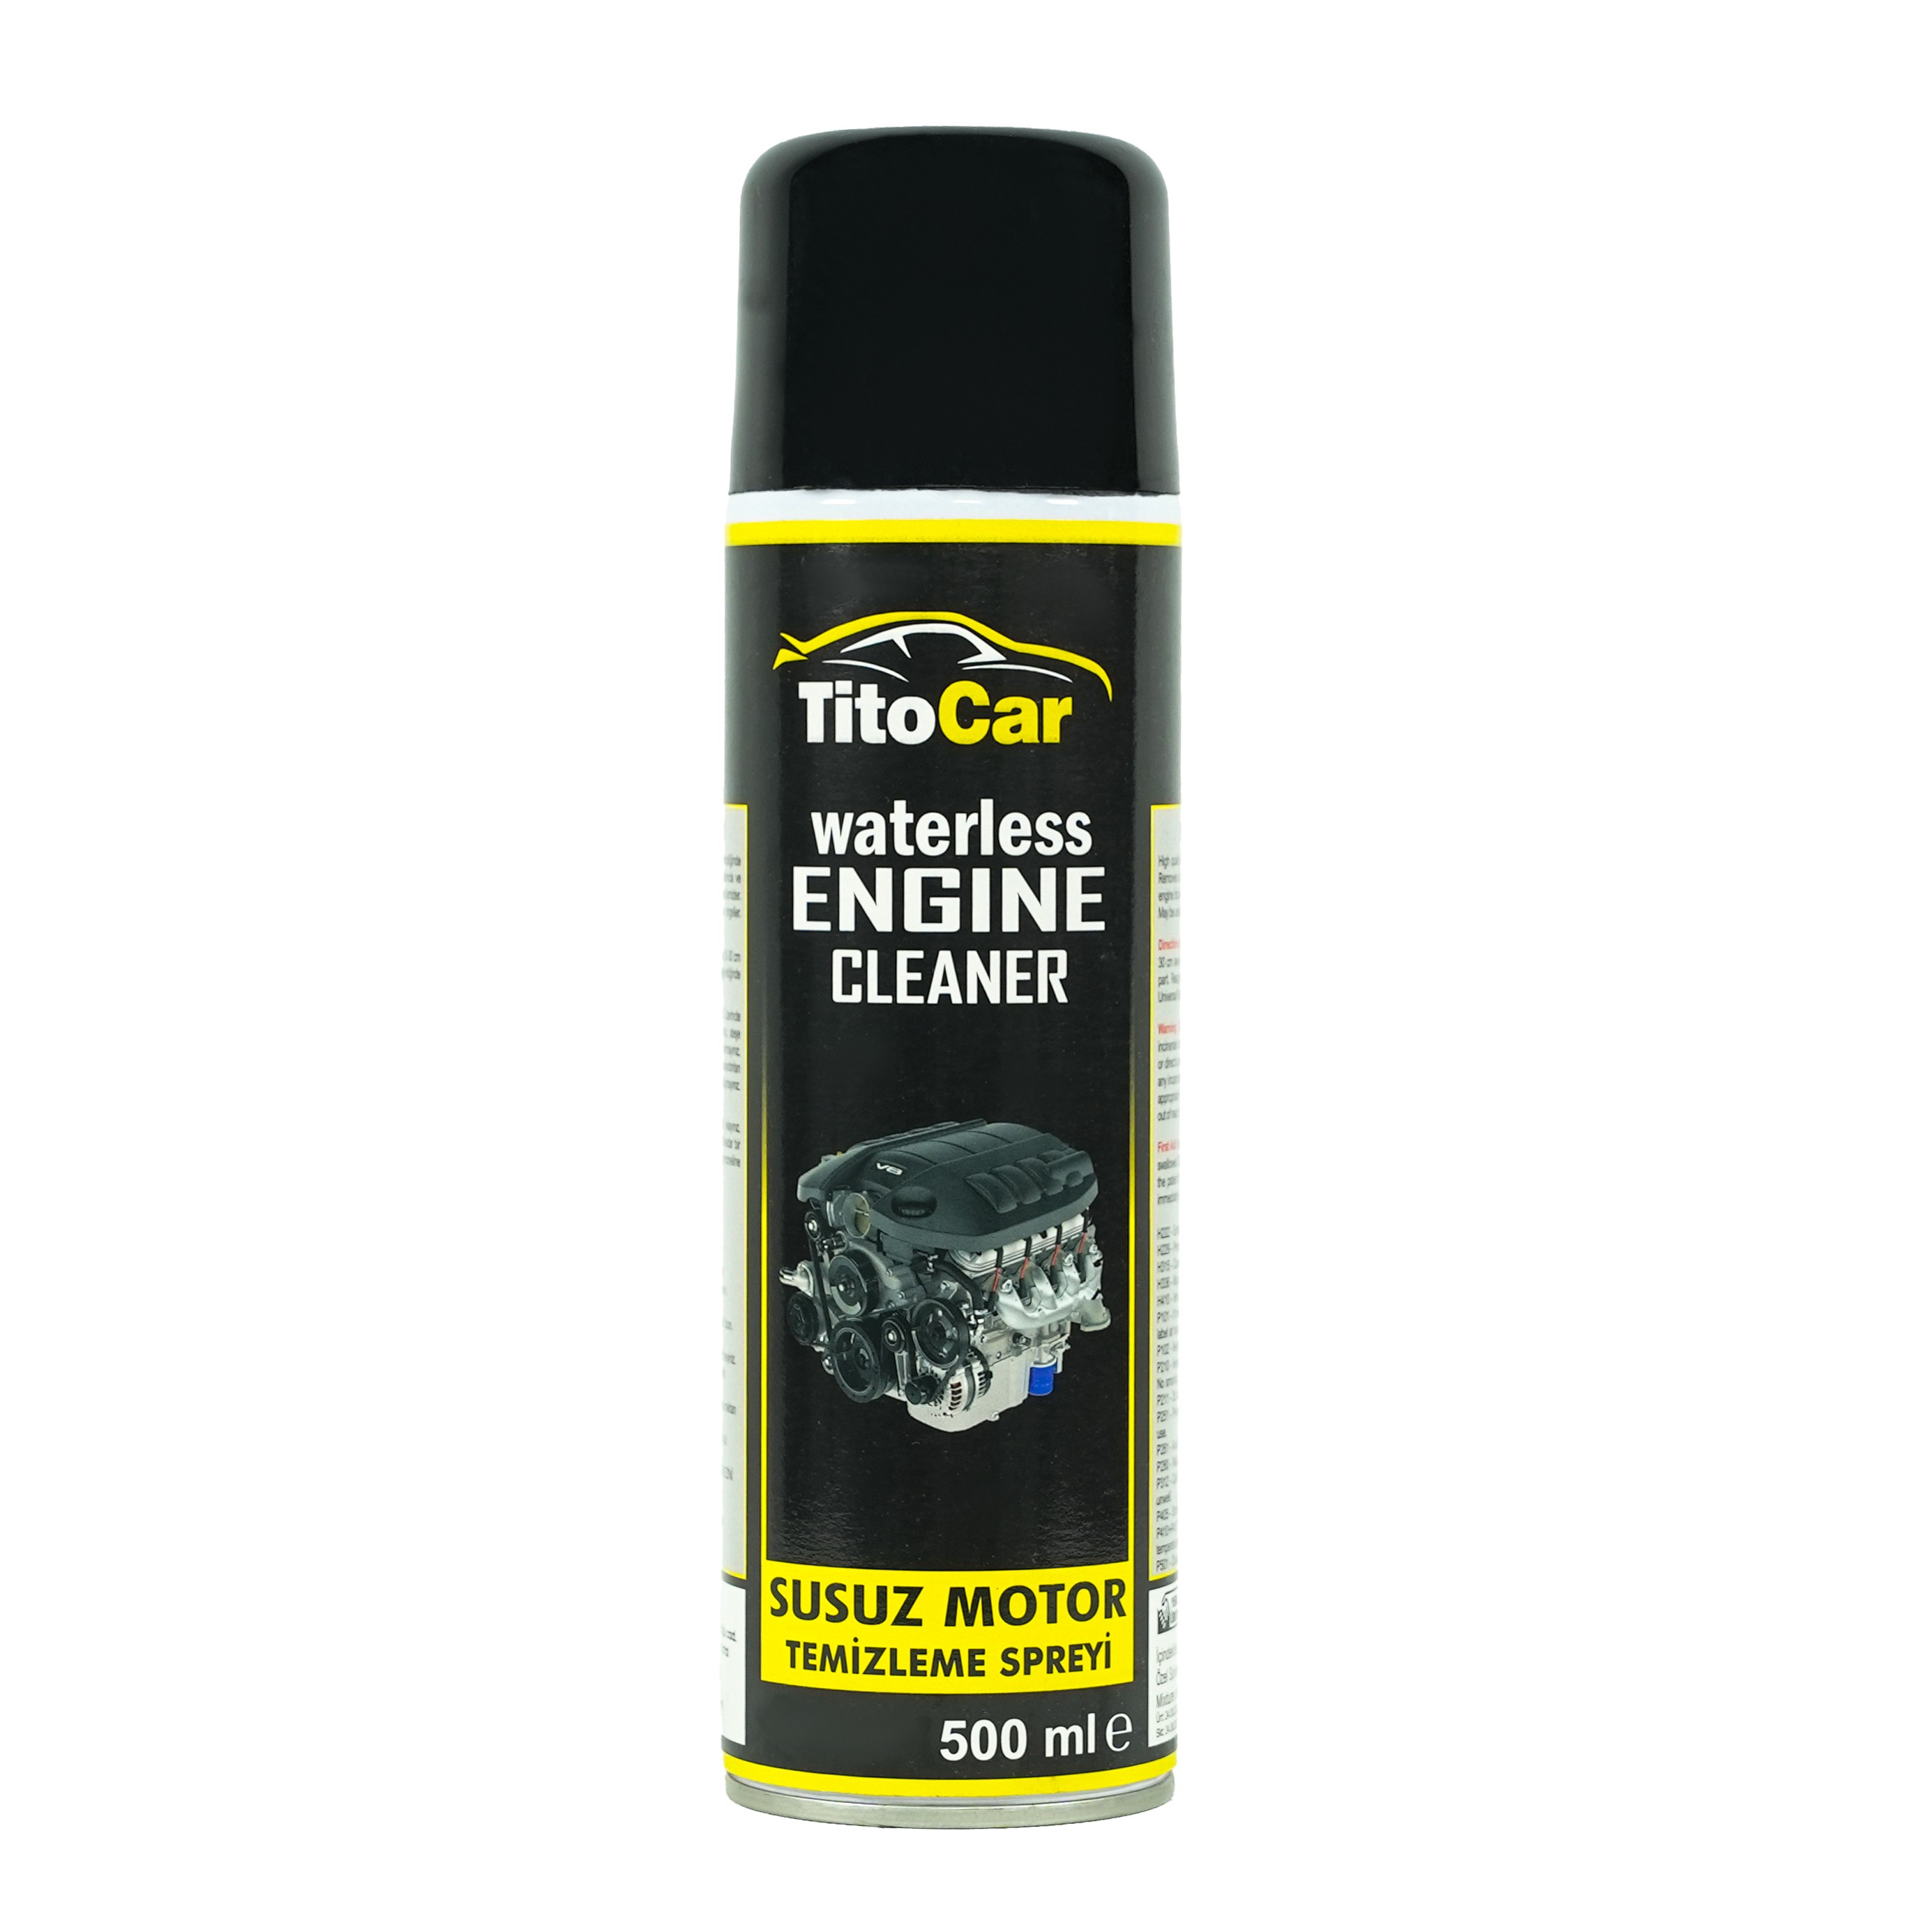 TitoCar Susuz Motor Temizleme Spreyi 500 ml